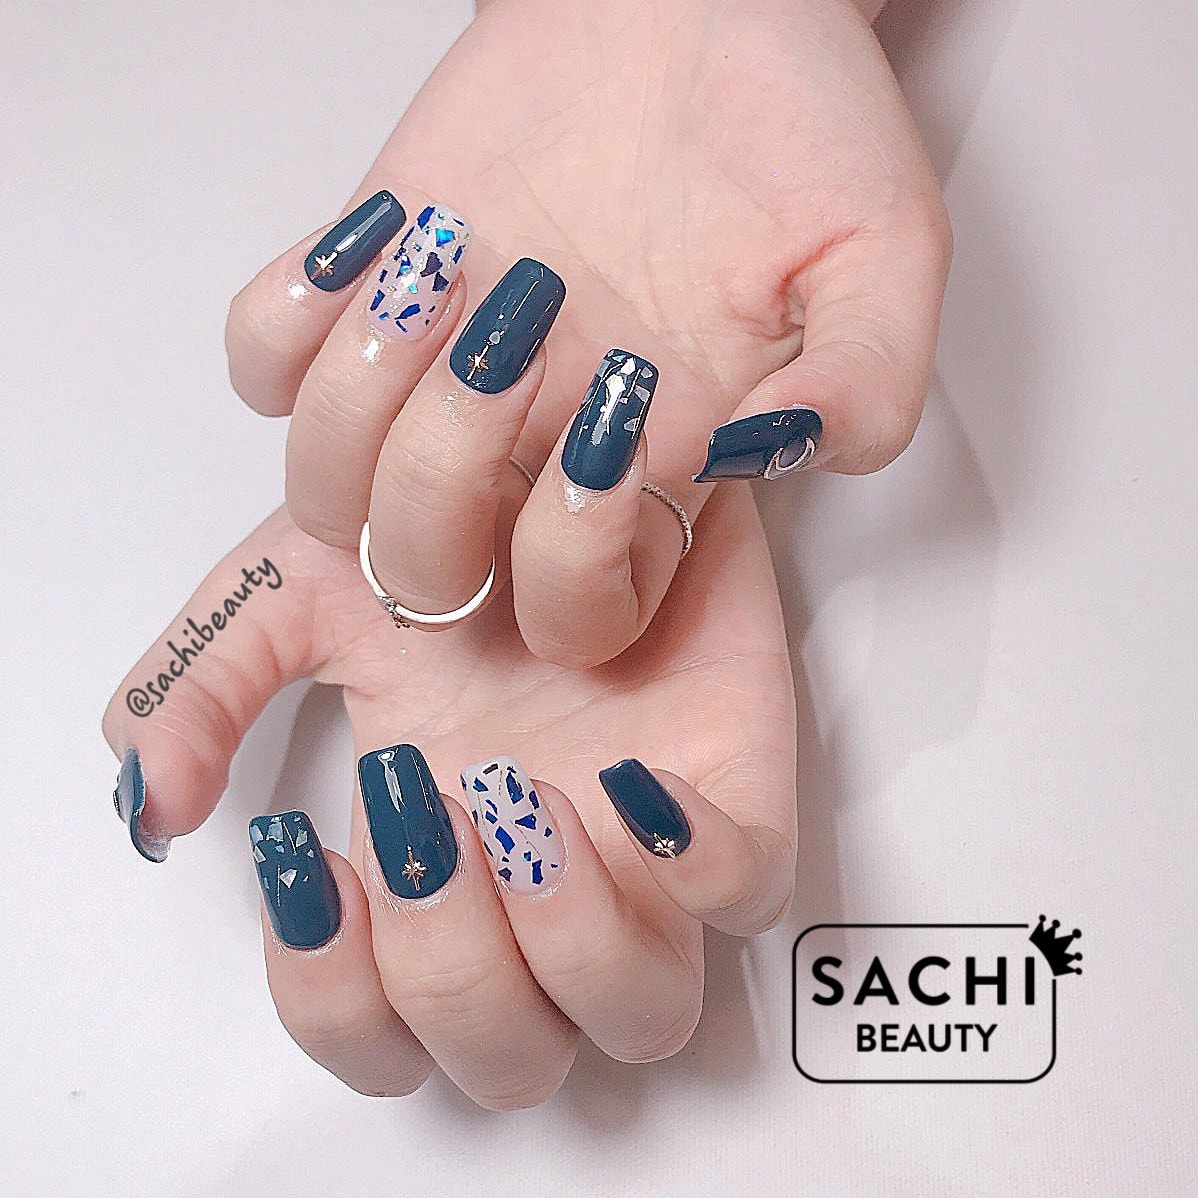 Sachi Beauty 1